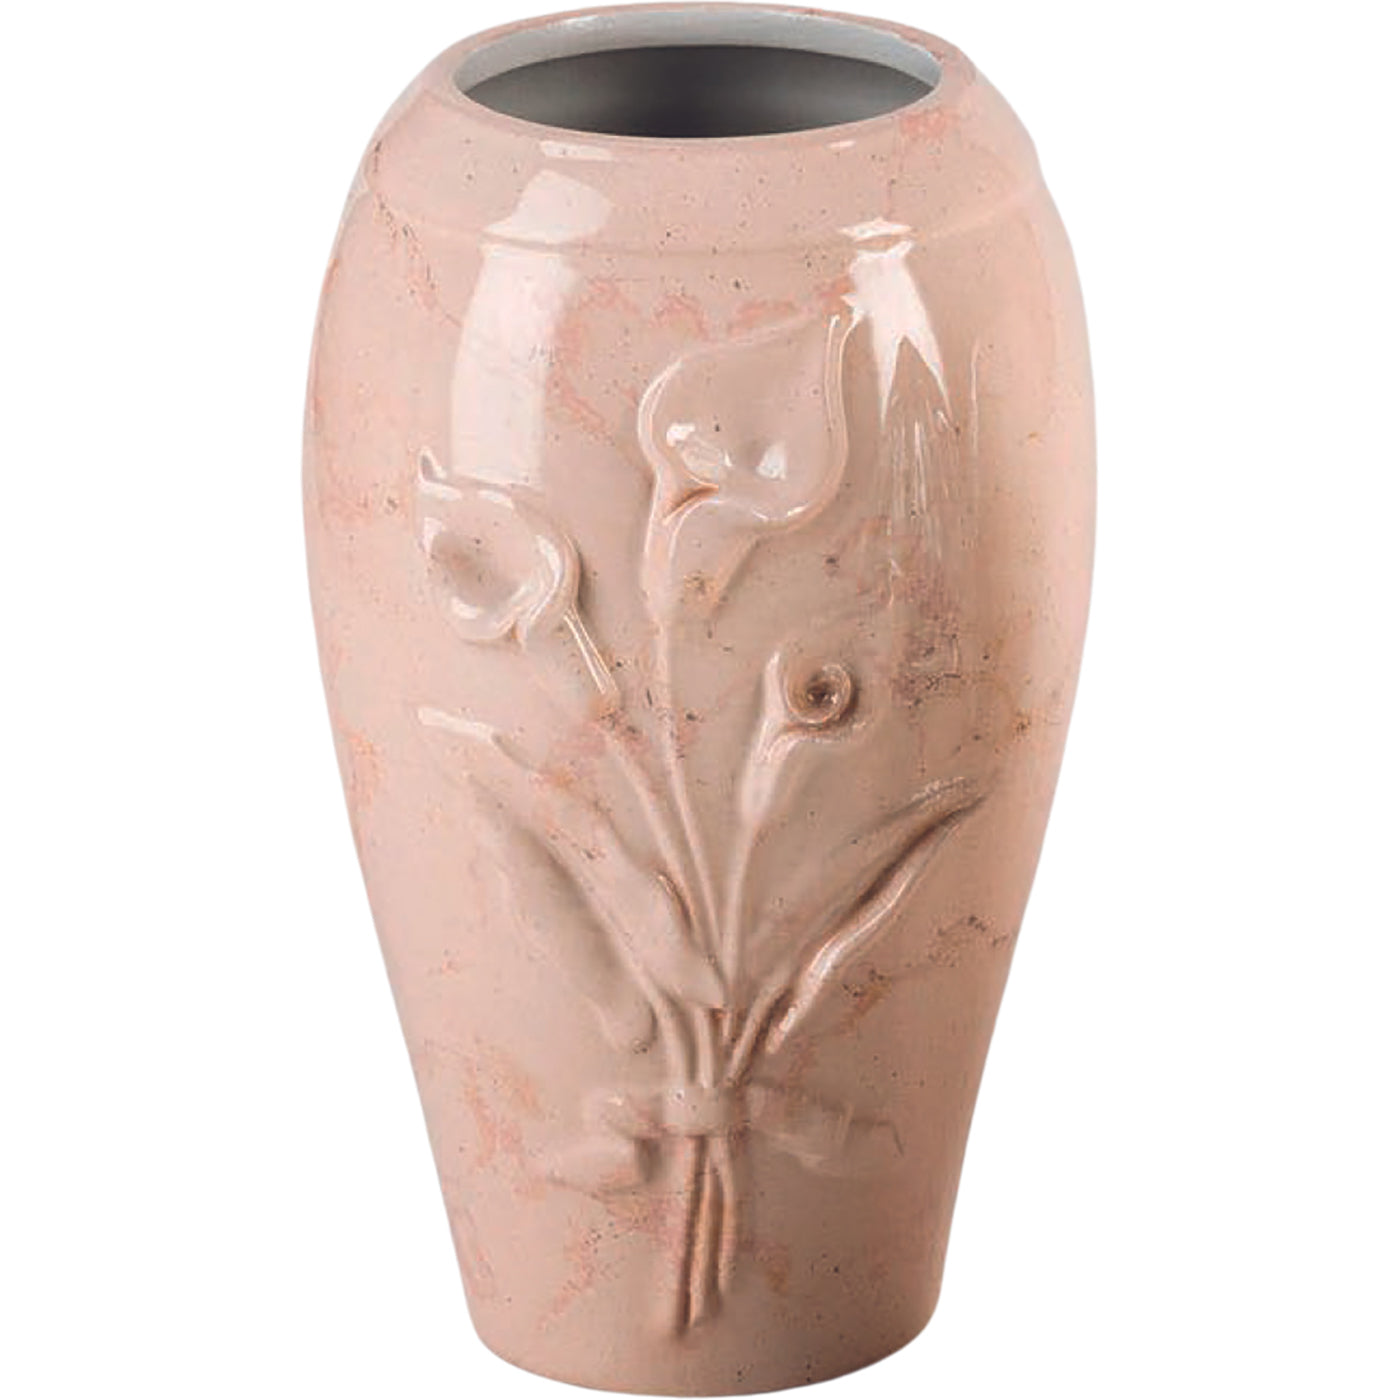 Grave vase Calla botticino 21x13cm - 8.3x5.1in In white porcelain with botticino decoration, ground attached CAL162P/BOTT